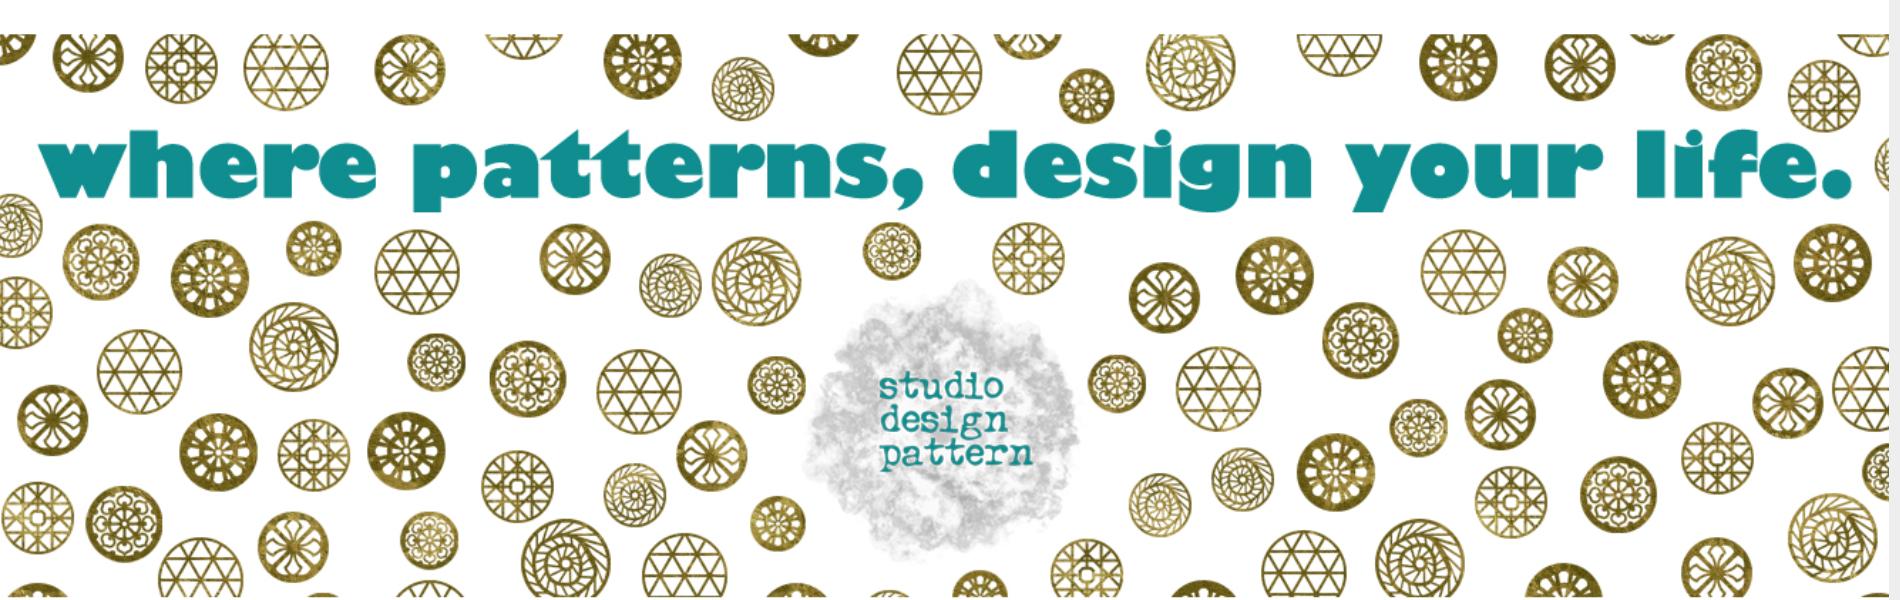 Studio Design Pattern